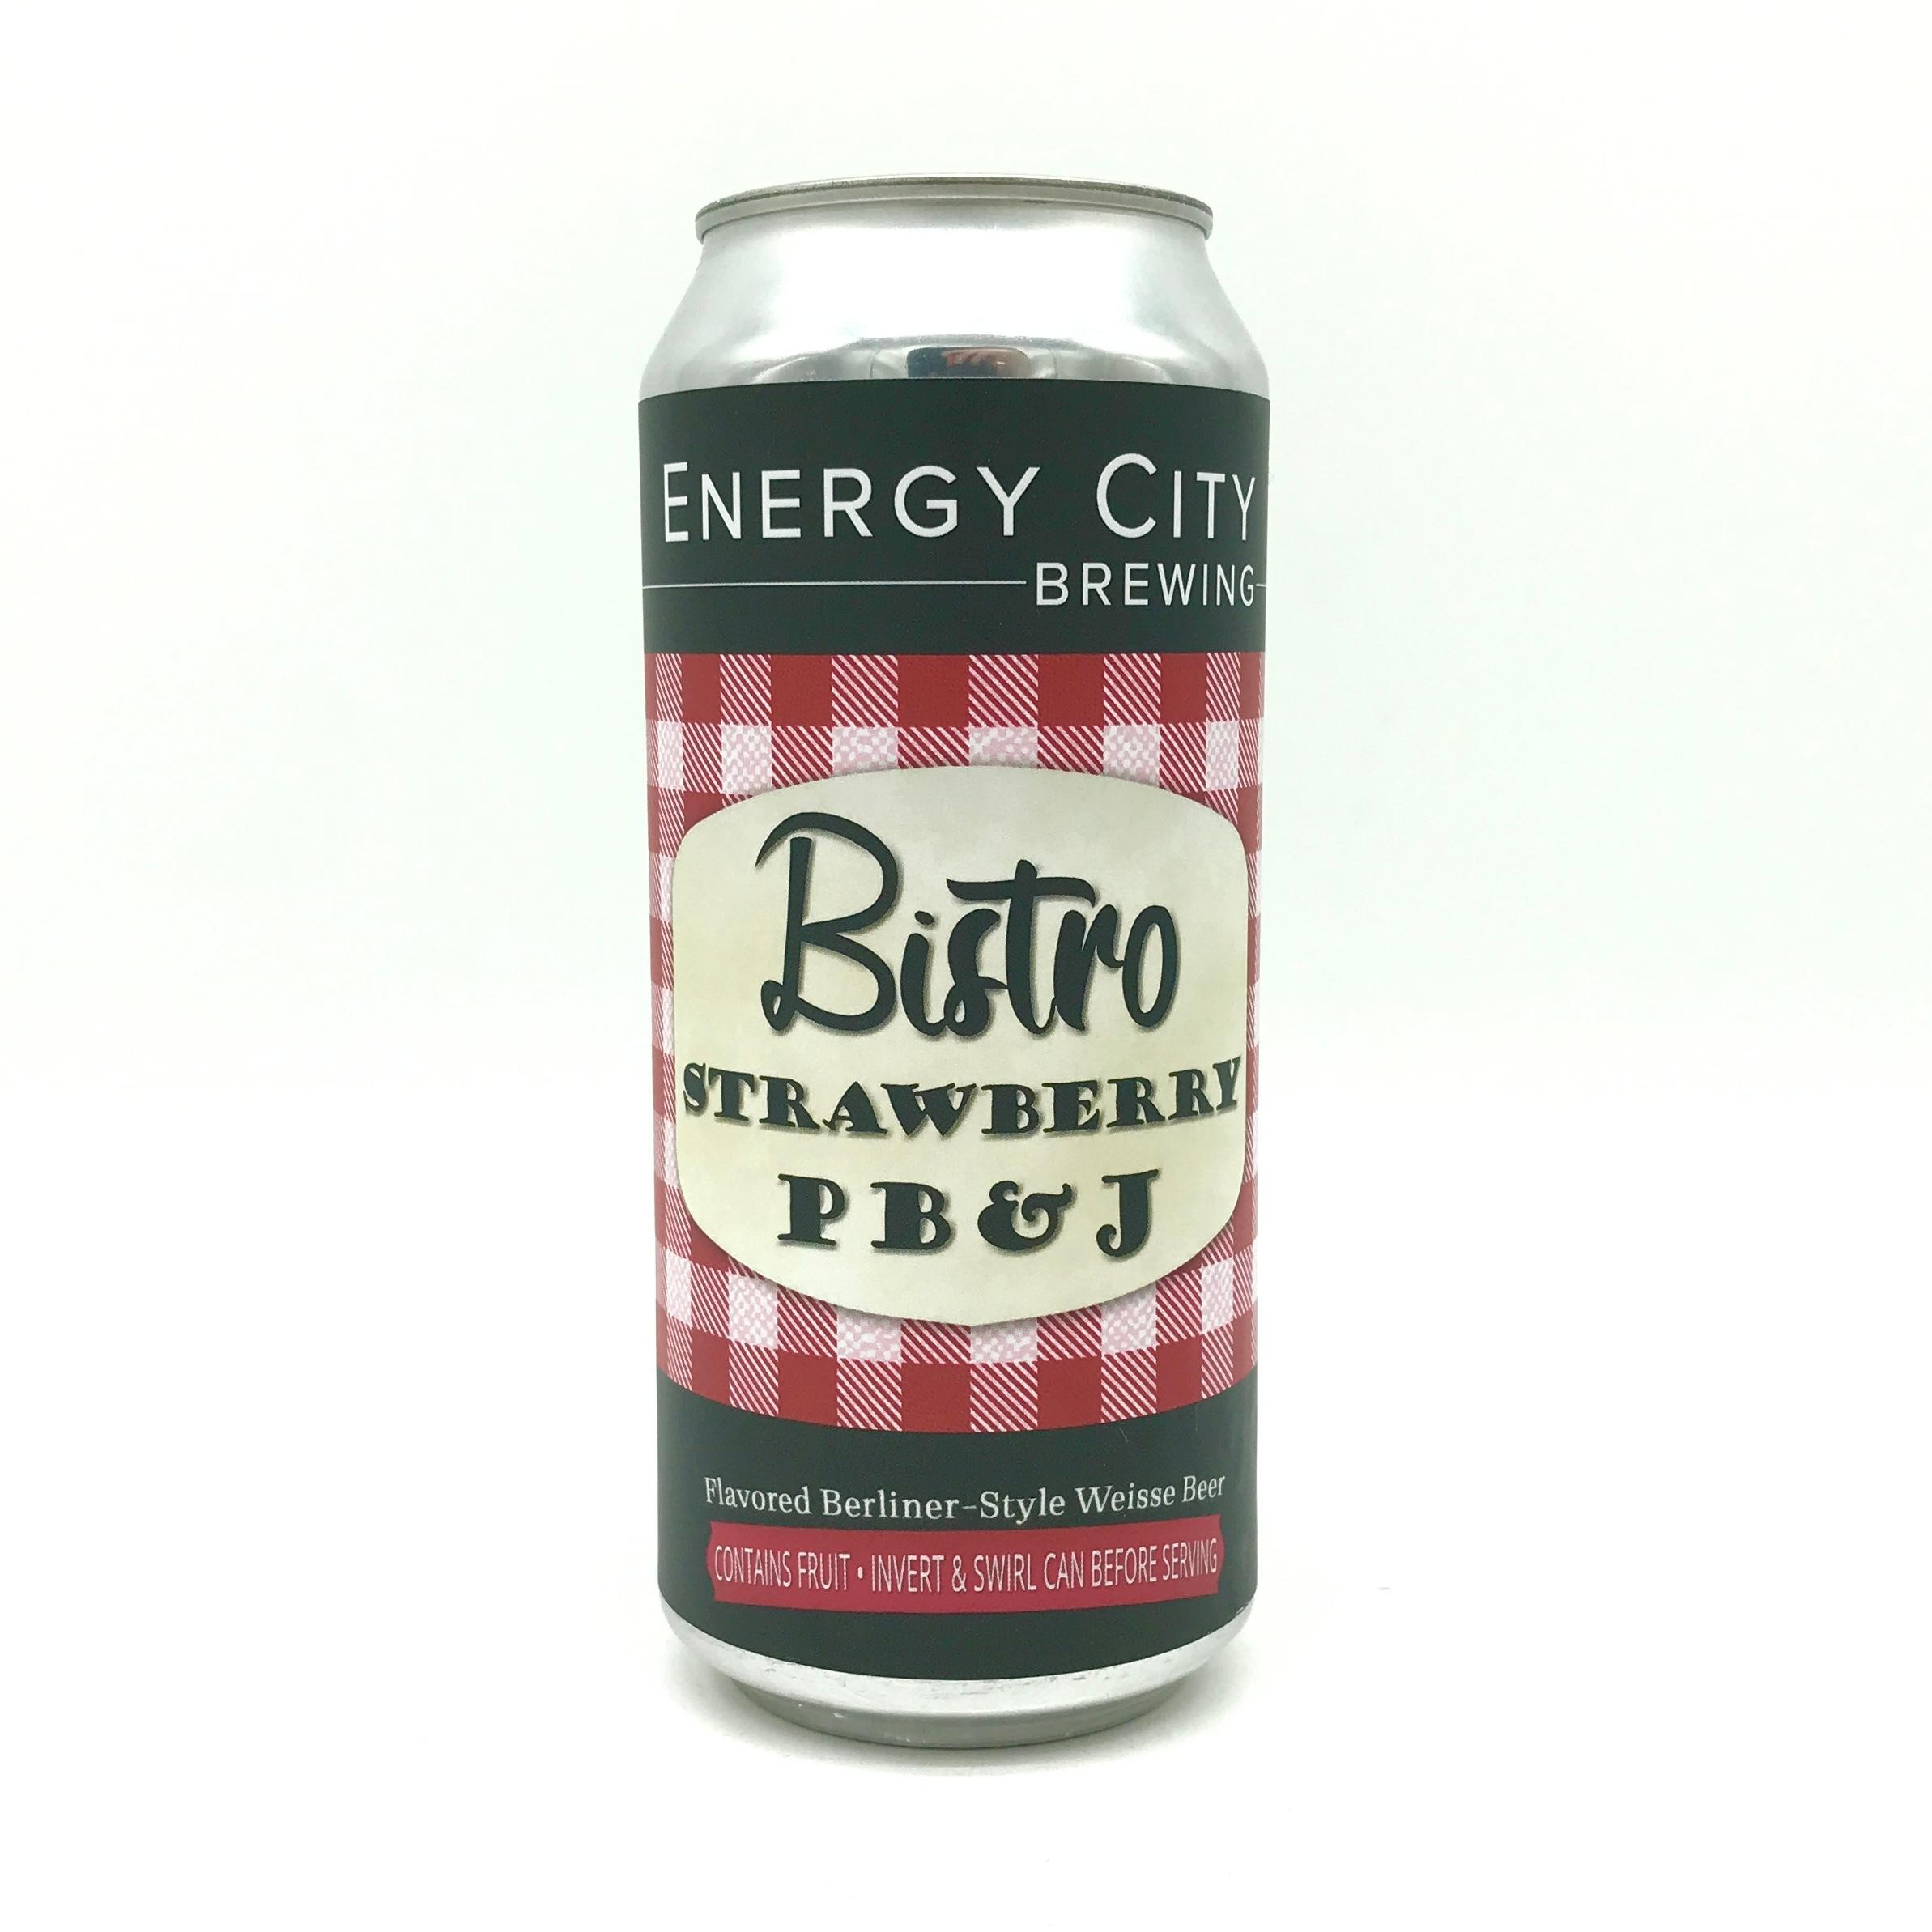 Energy City - Bistro: Strawberry PB&J